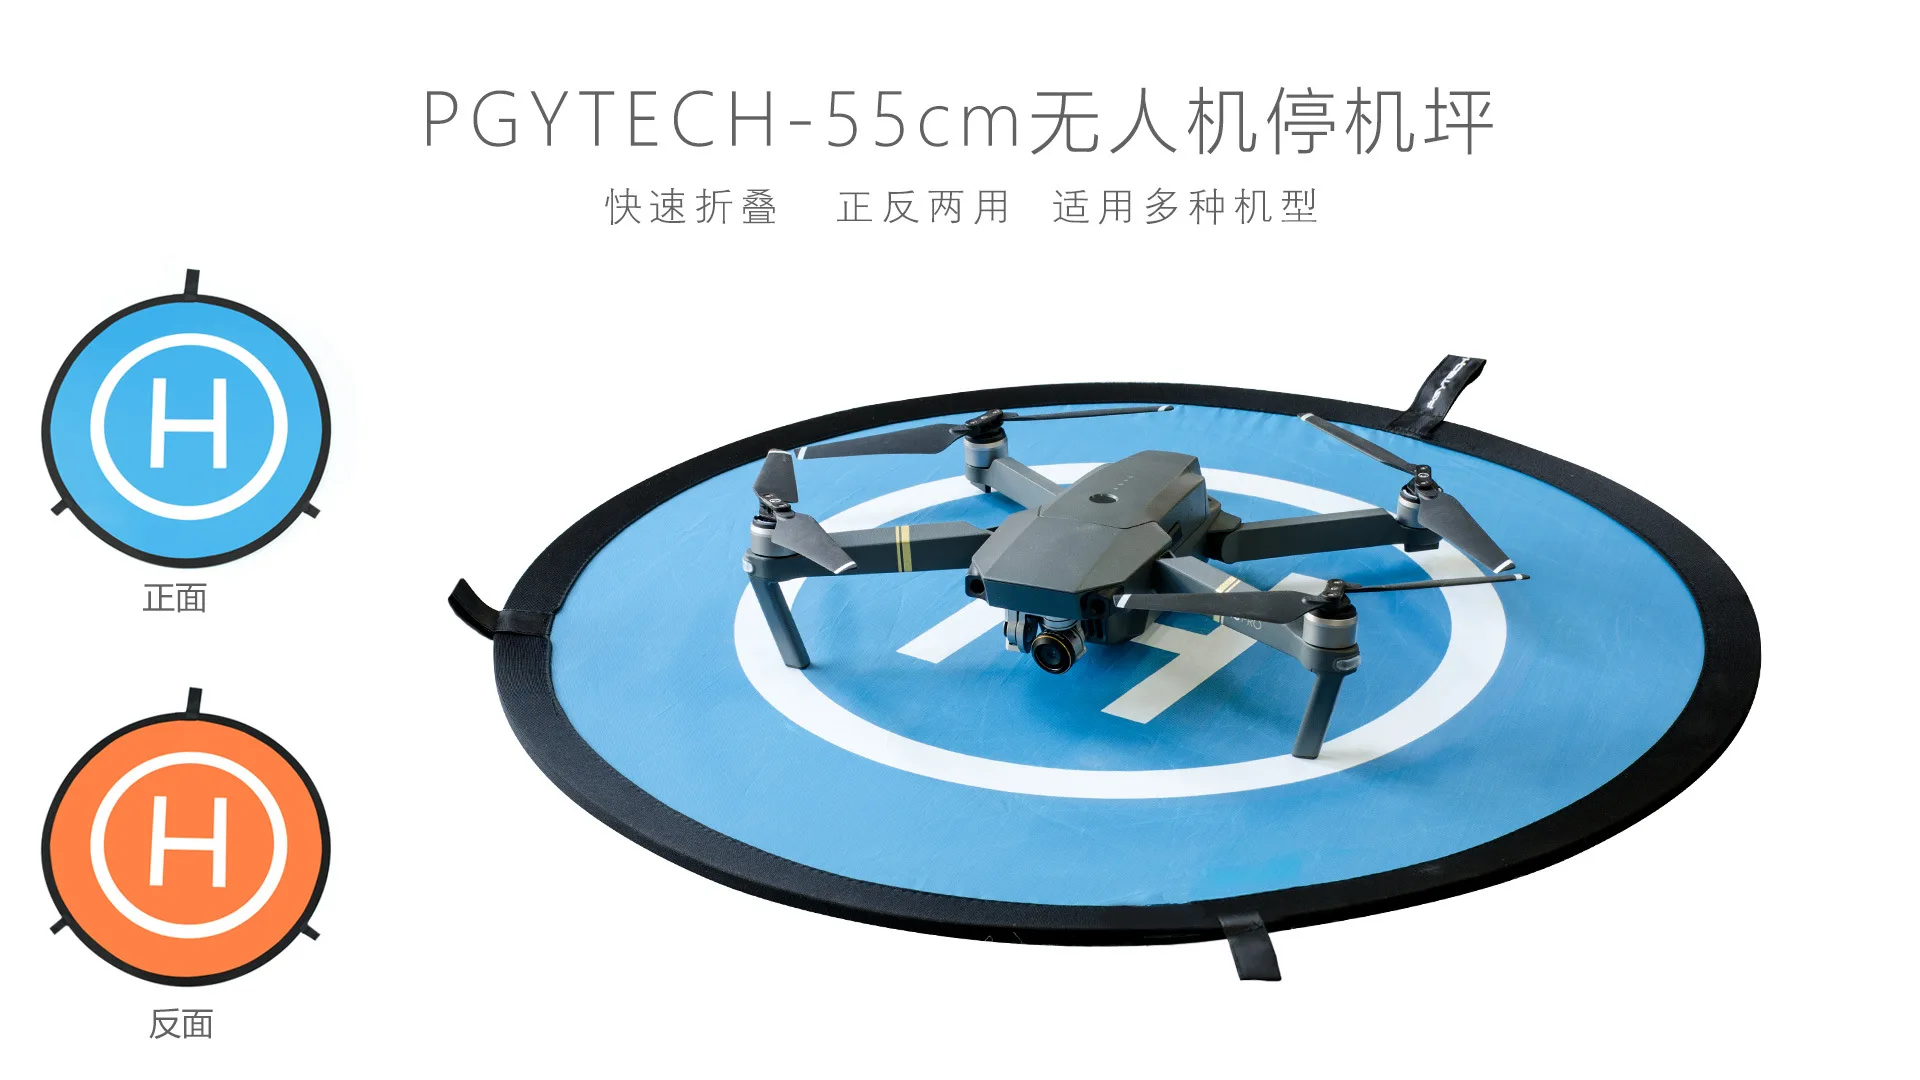 Pgytech dji yulai Mavic Air/Pro/Xiao Spark YULAI 2 UAV парковочный фартук посадочная площадка 55 см